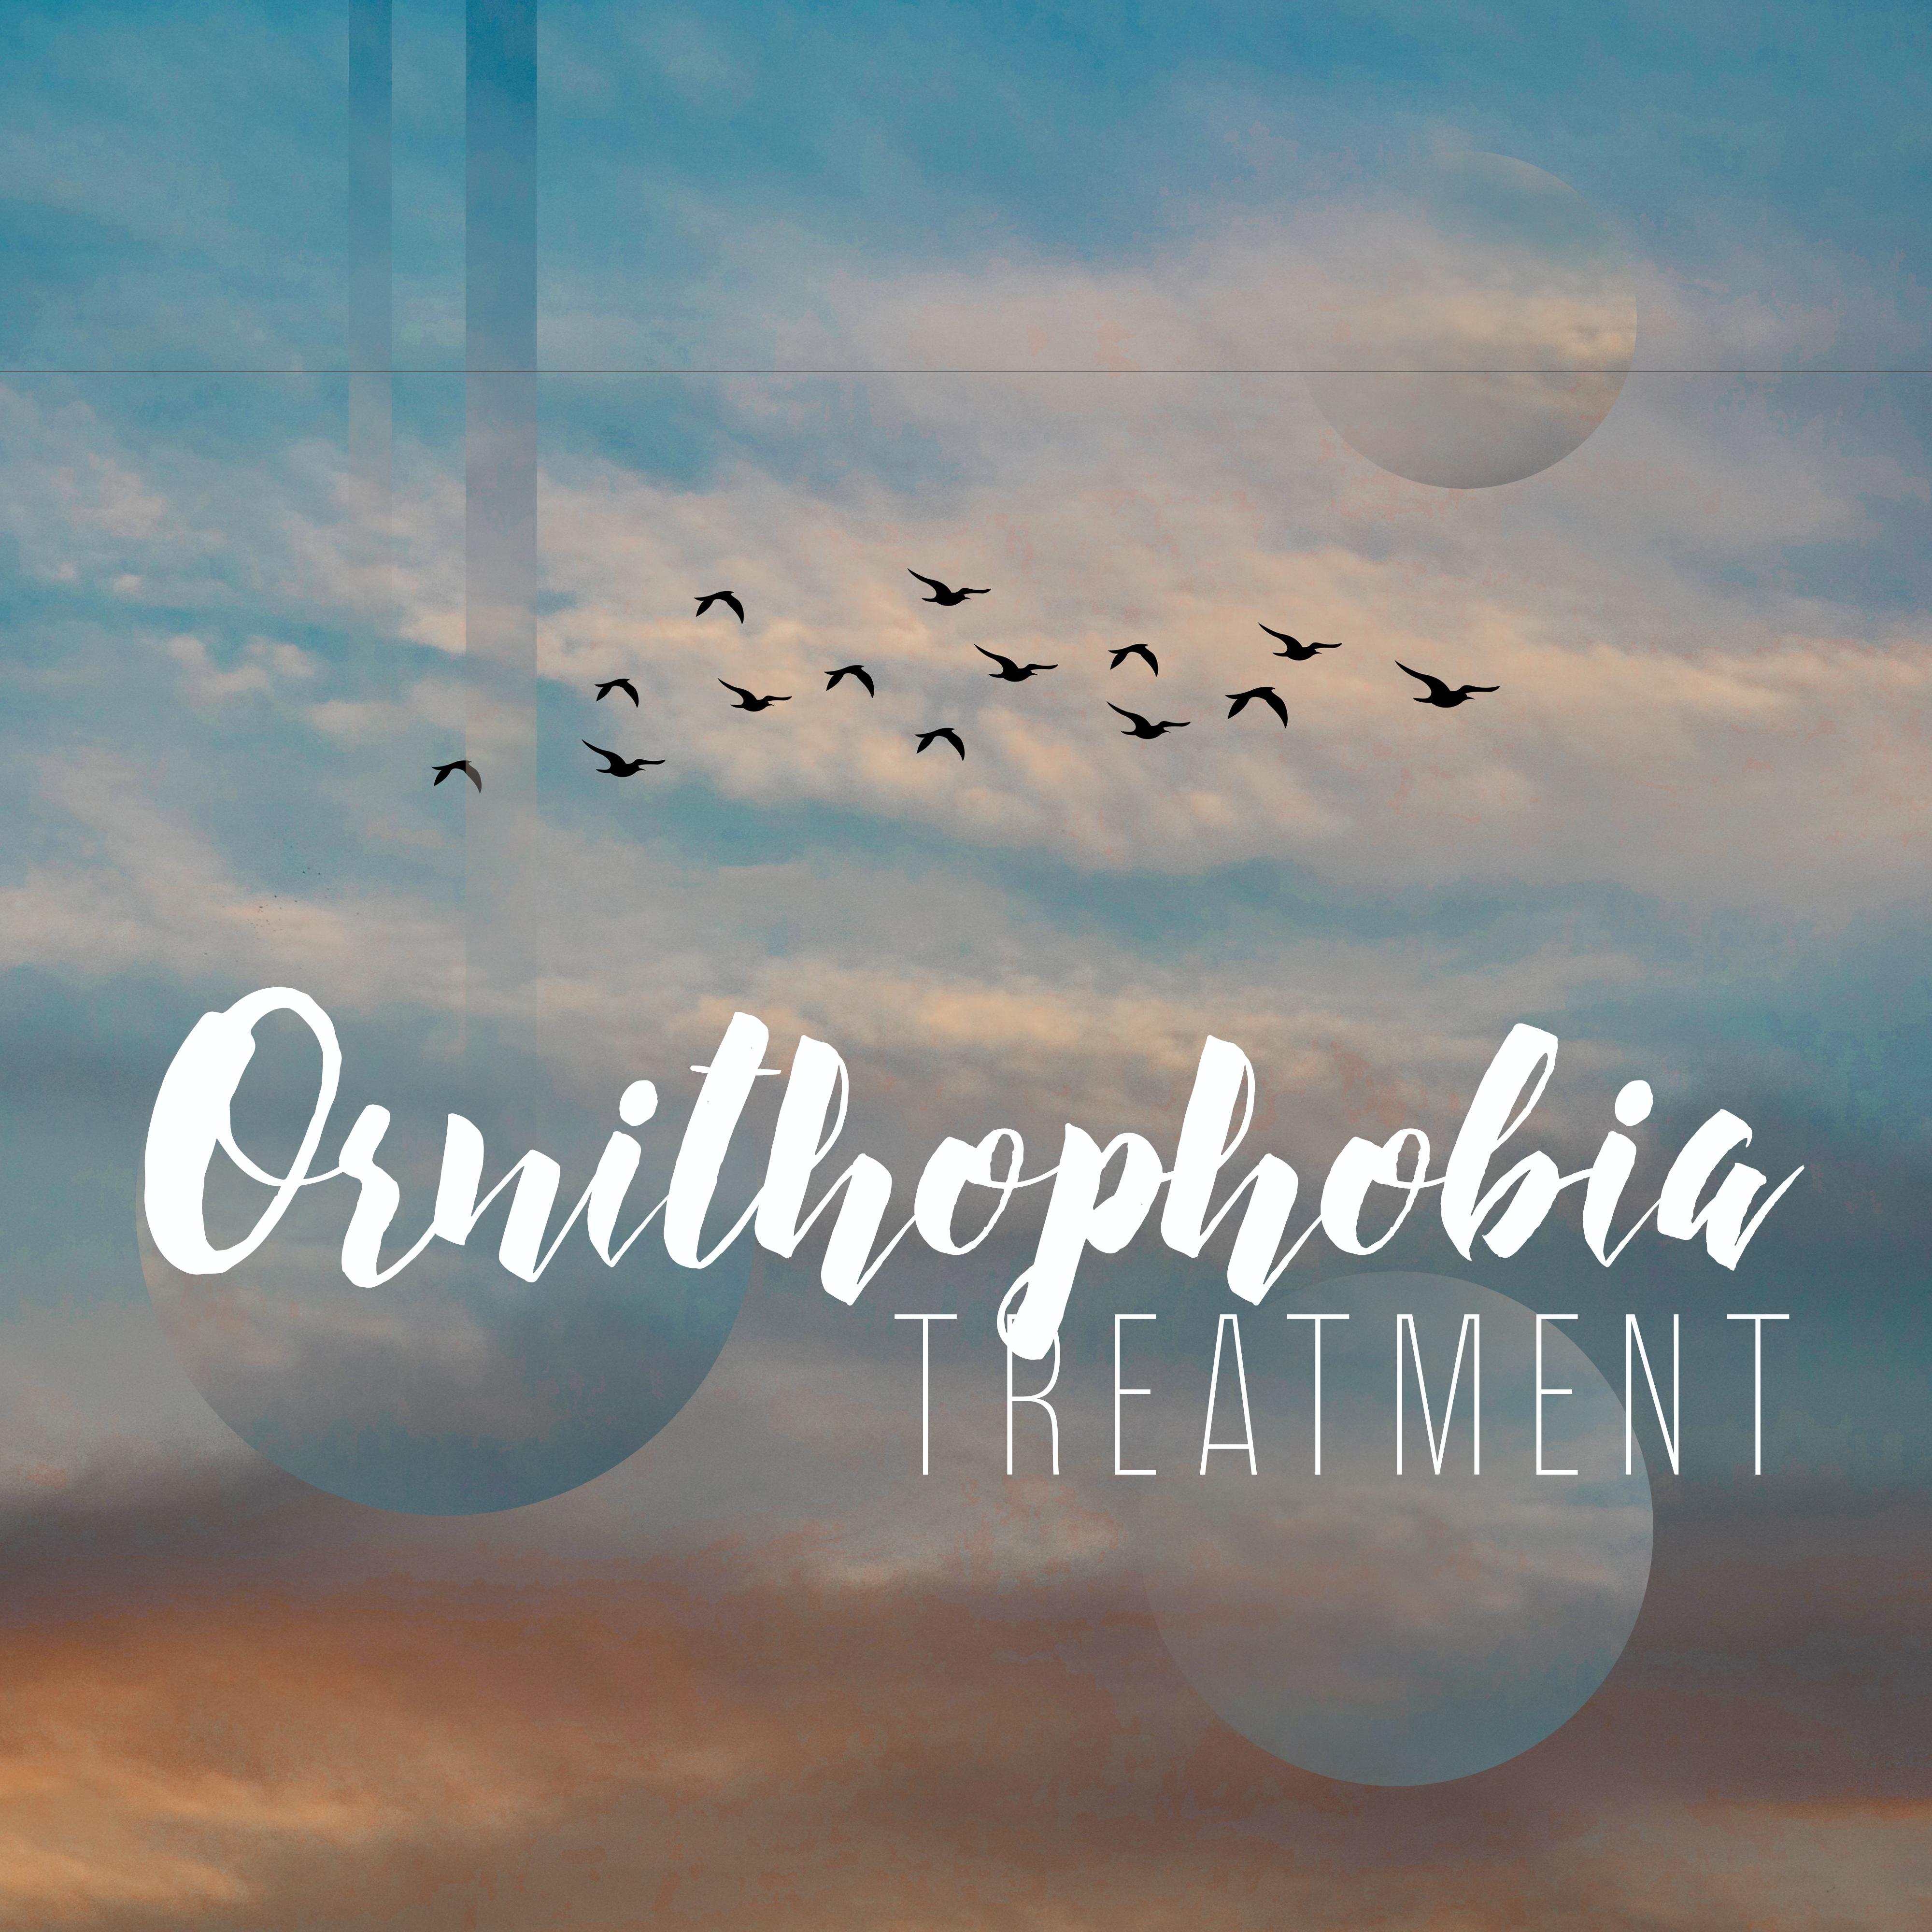 Ornithophobia Treatment - Therapeutic Relaxation Music to Desensitize Negative Stimuli through Gradual Familiarization with Birds